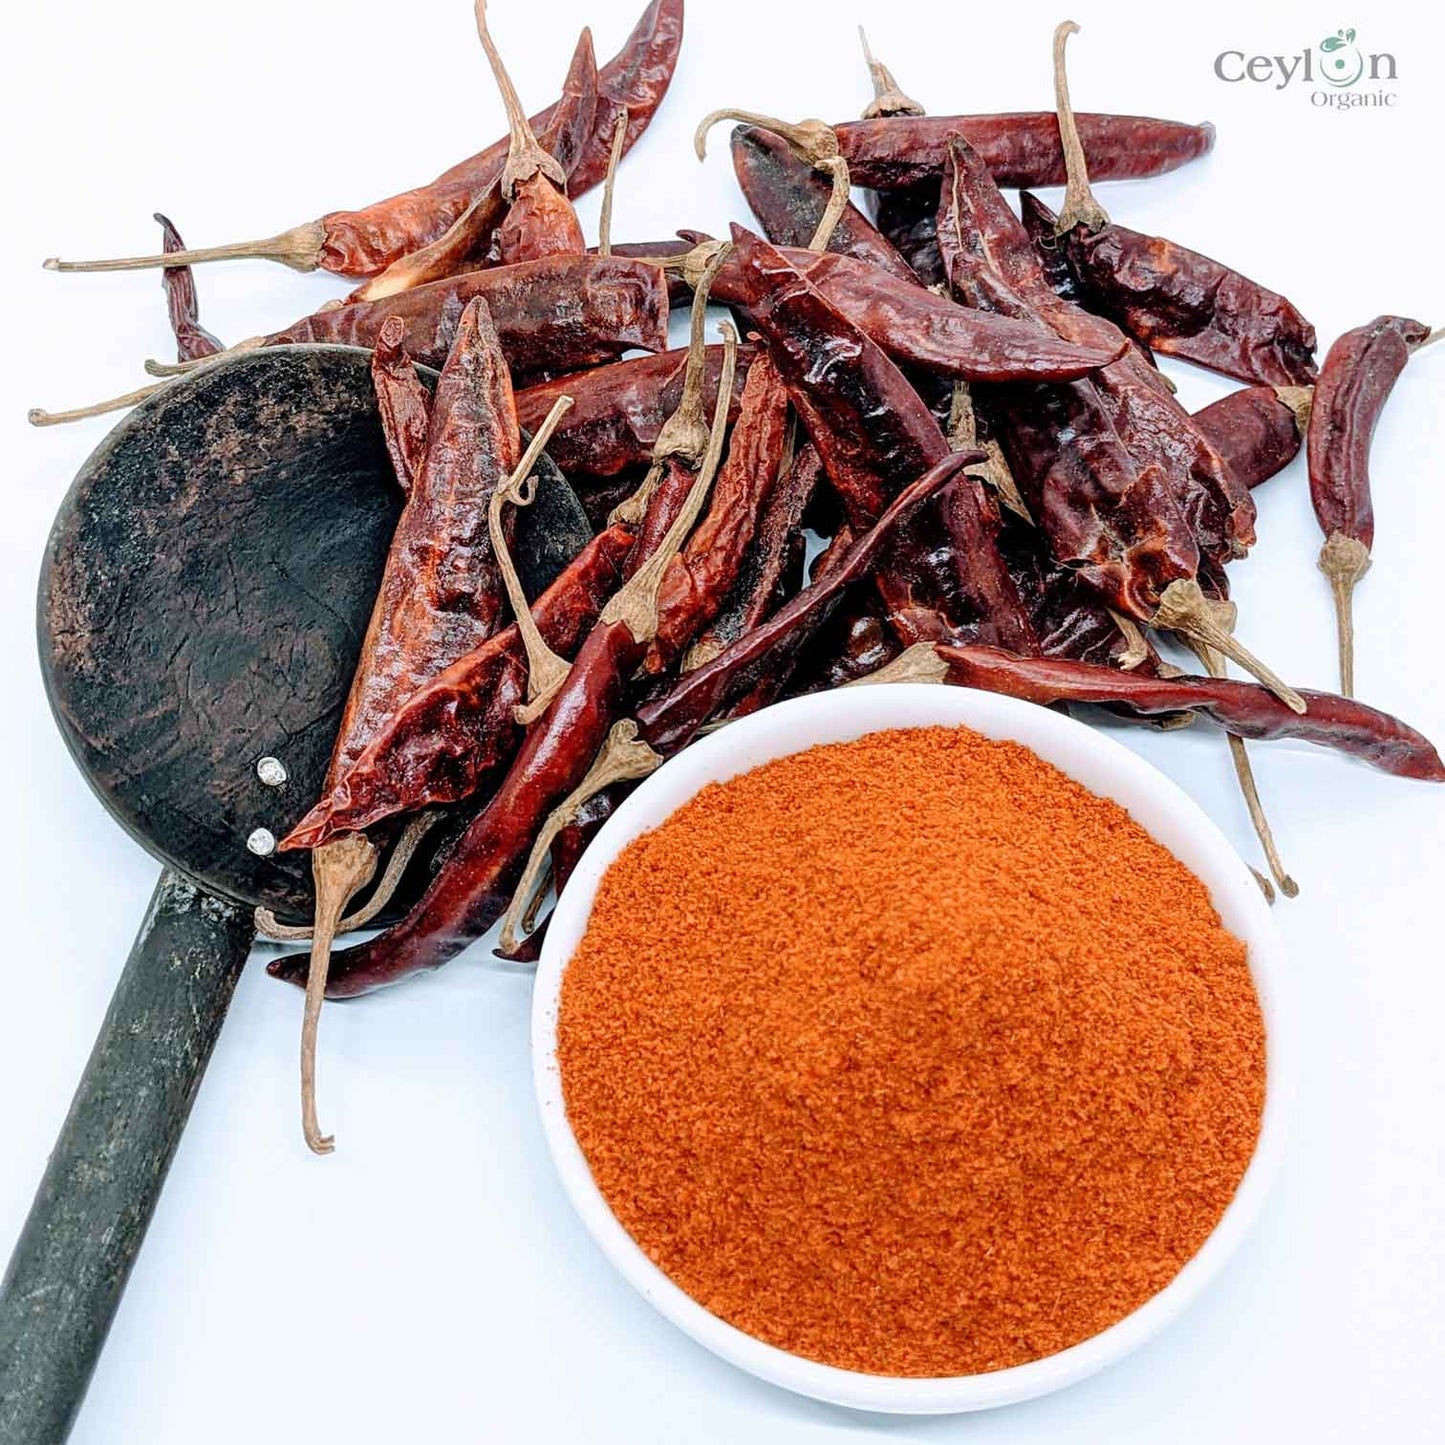 500g+ Ceylon Chilli Powder 100% Organic Natural Premium Sri Lankan Quality | Ceylon Organic-1